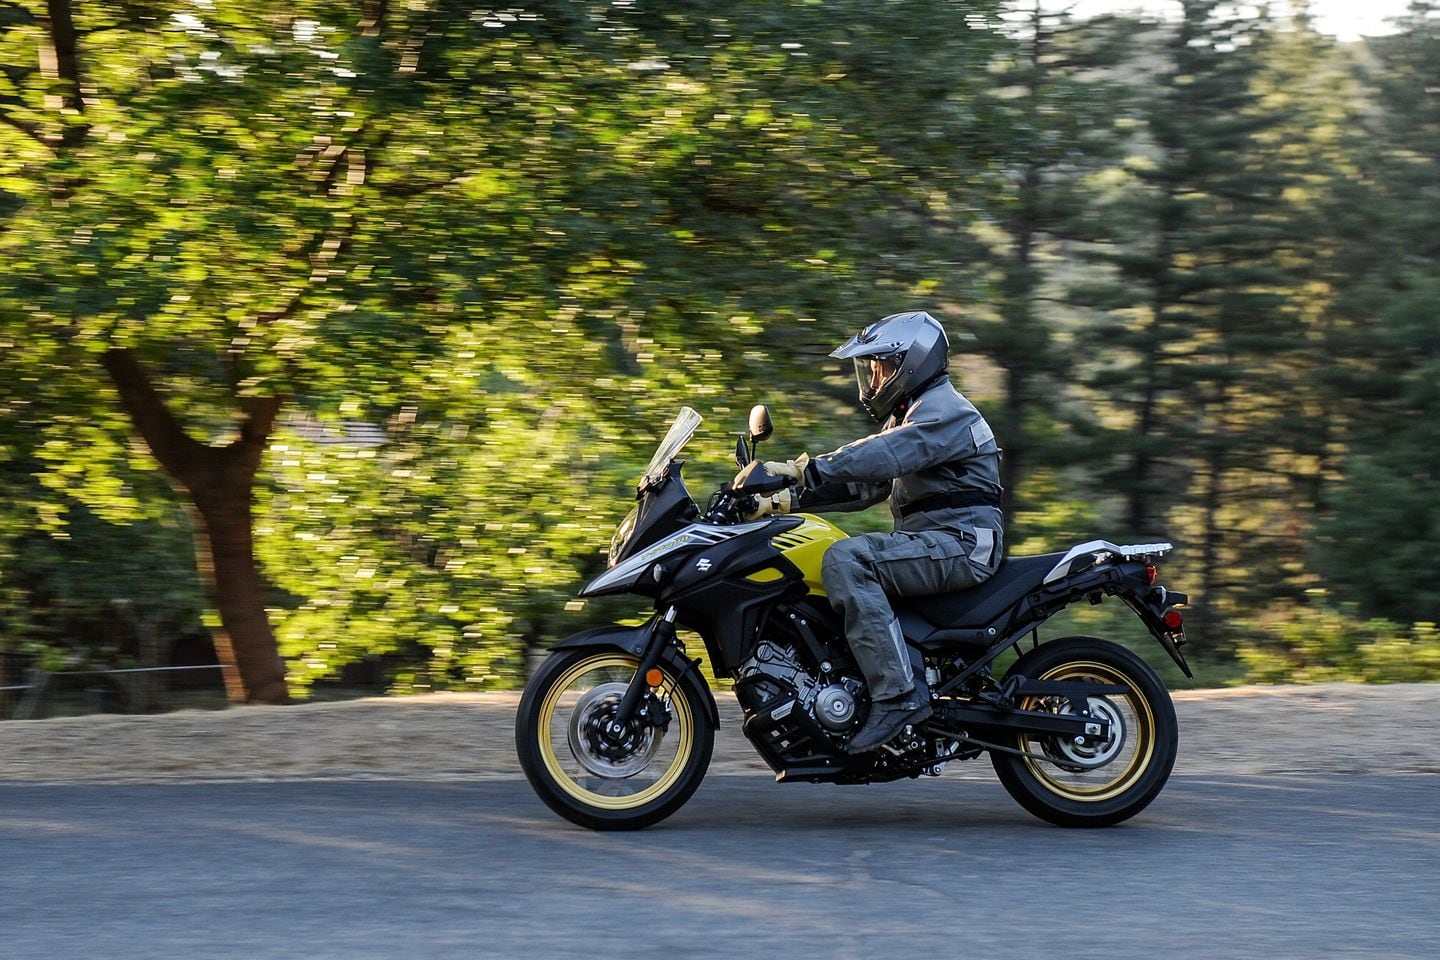 SUZUKI V-STROM 650 XT (2017-on) Motorcycle Review